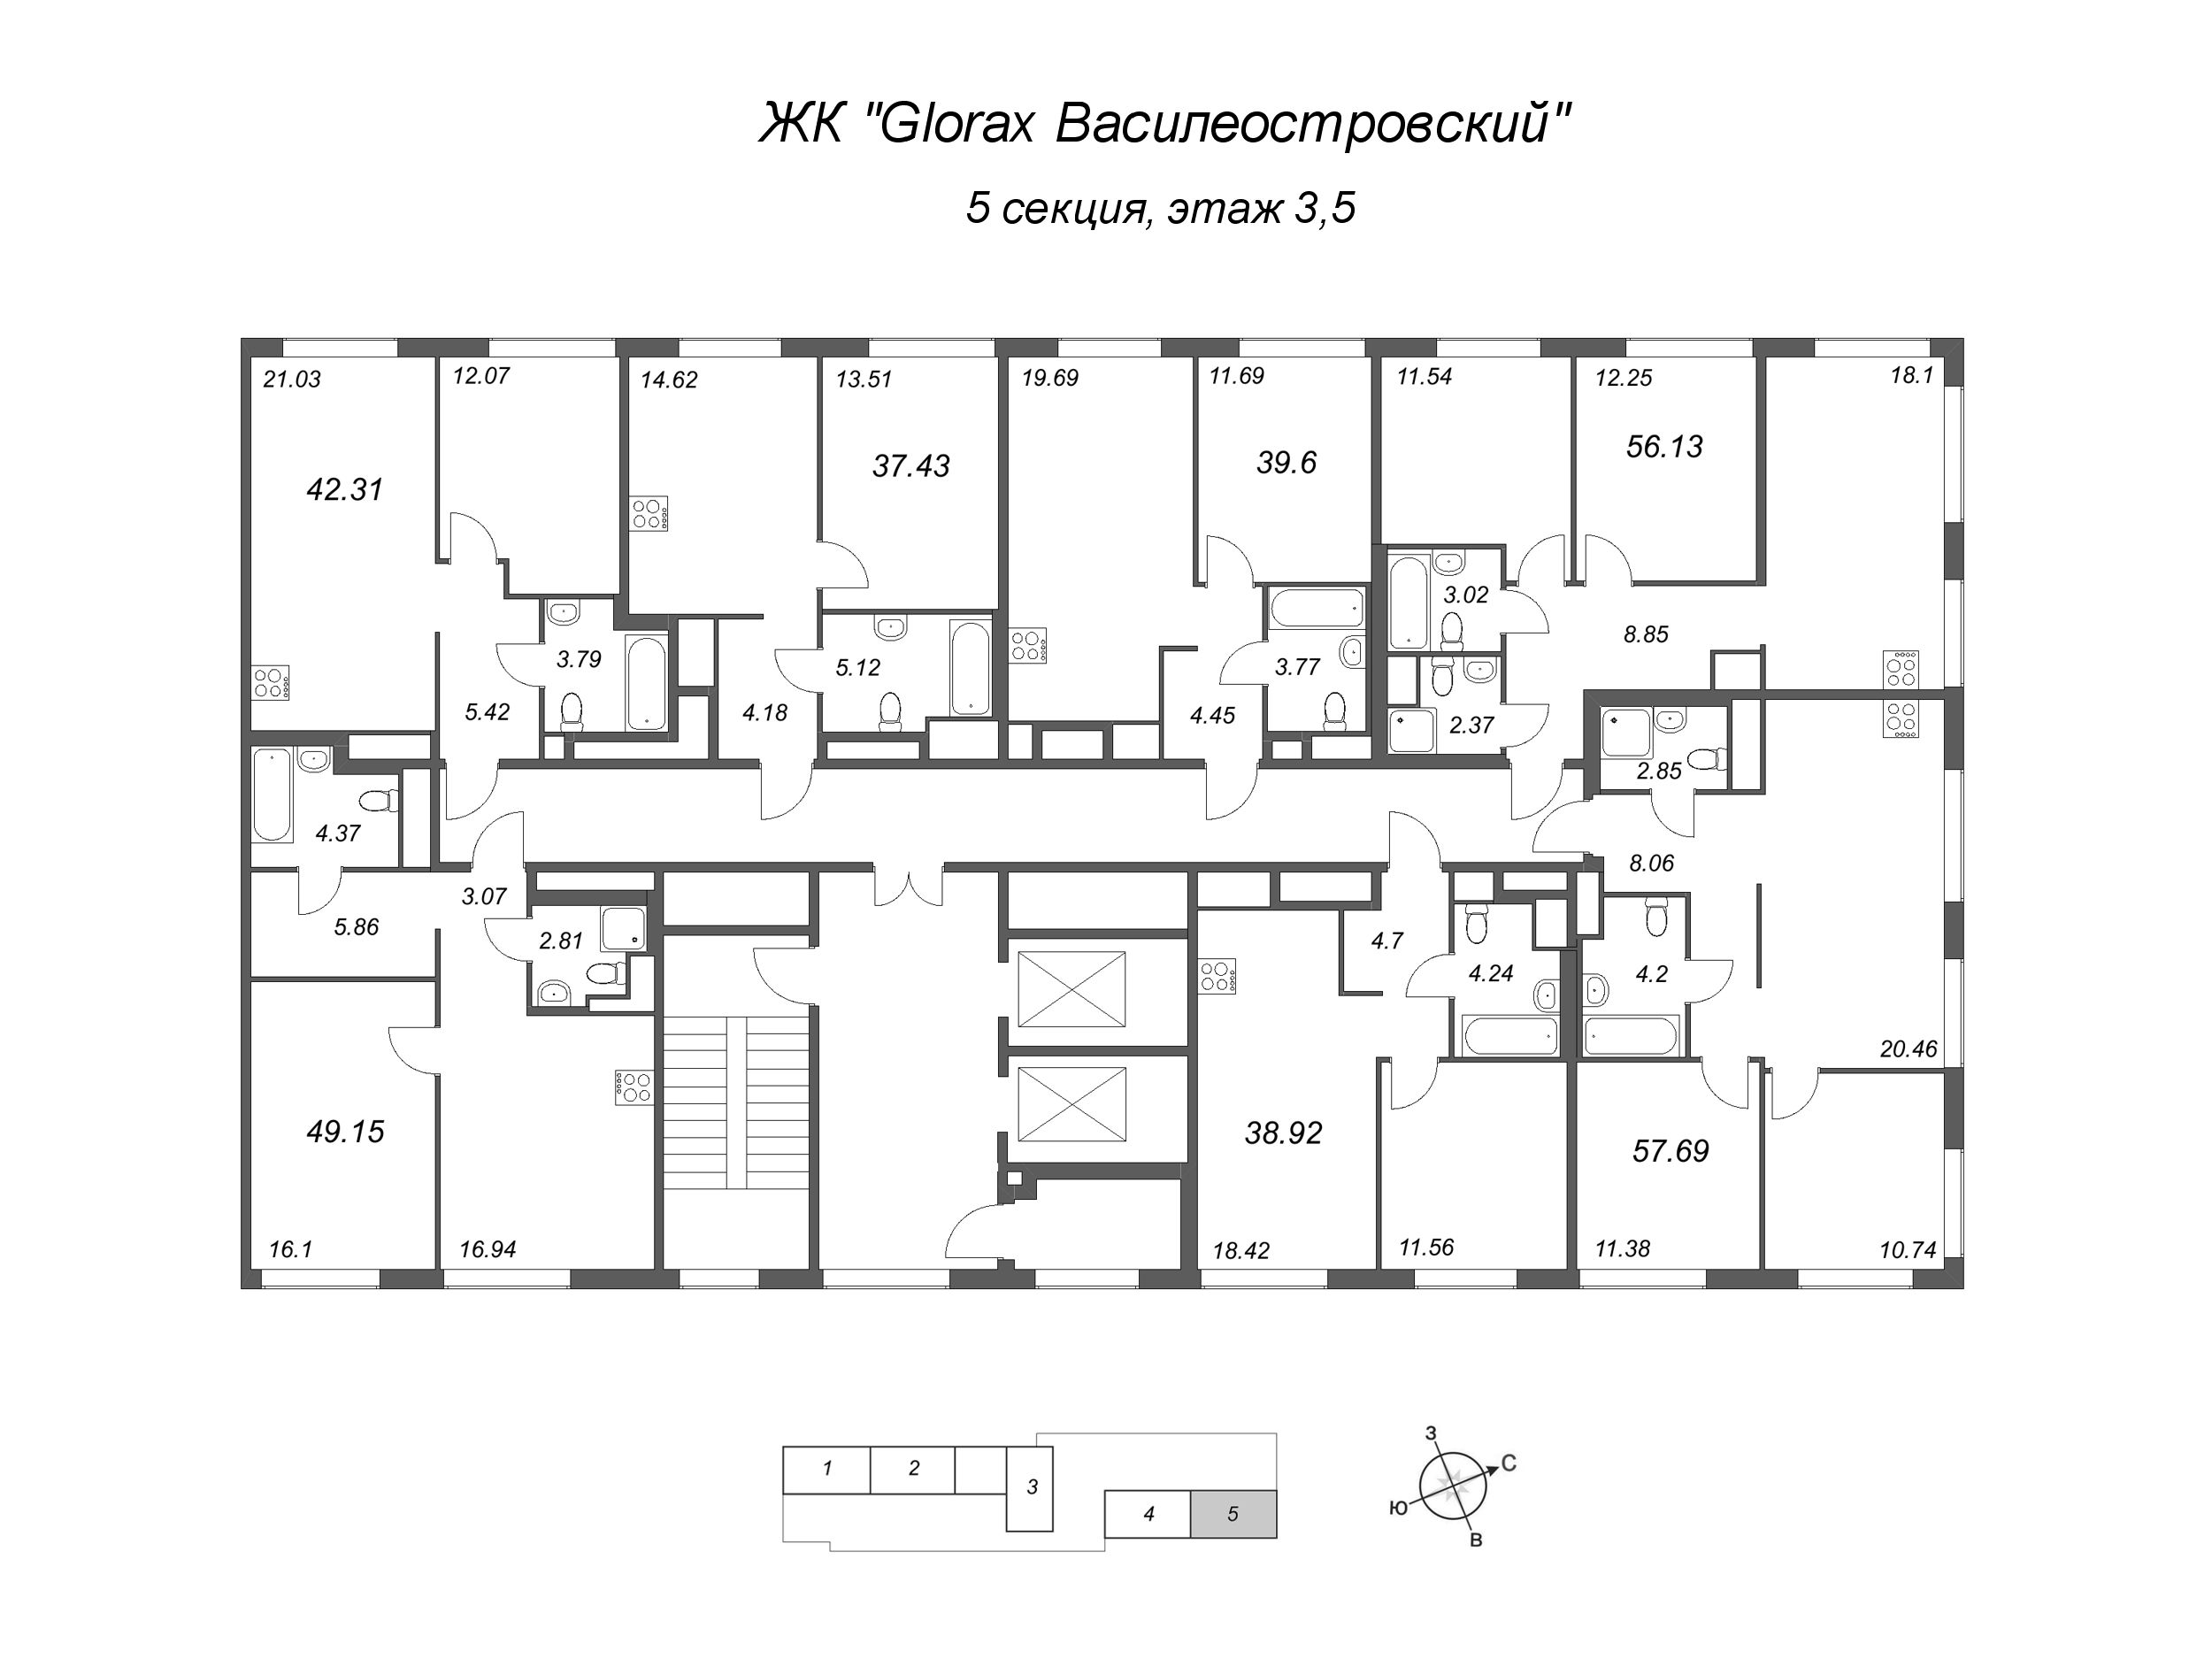 3-комнатная (Евро) квартира, 56.13 м² - планировка этажа